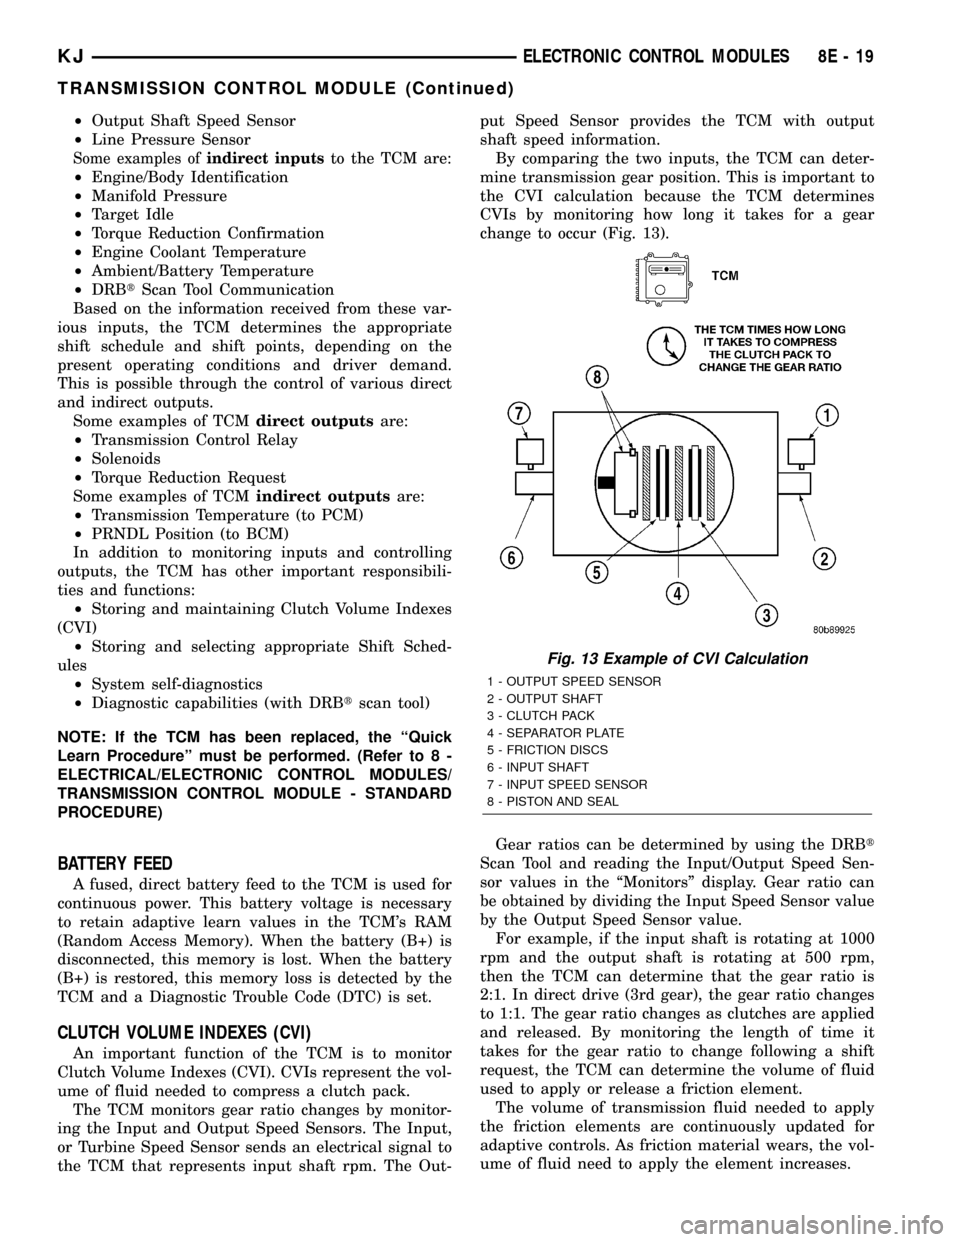 JEEP LIBERTY 2002 KJ / 1.G Workshop Manual ²Output Shaft Speed Sensor
²Line Pressure Sensor
Some examples ofindirect inputsto the TCM are:
²Engine/Body Identification
²Manifold Pressure
²Target Idle
²Torque Reduction Confirmation
²Engin